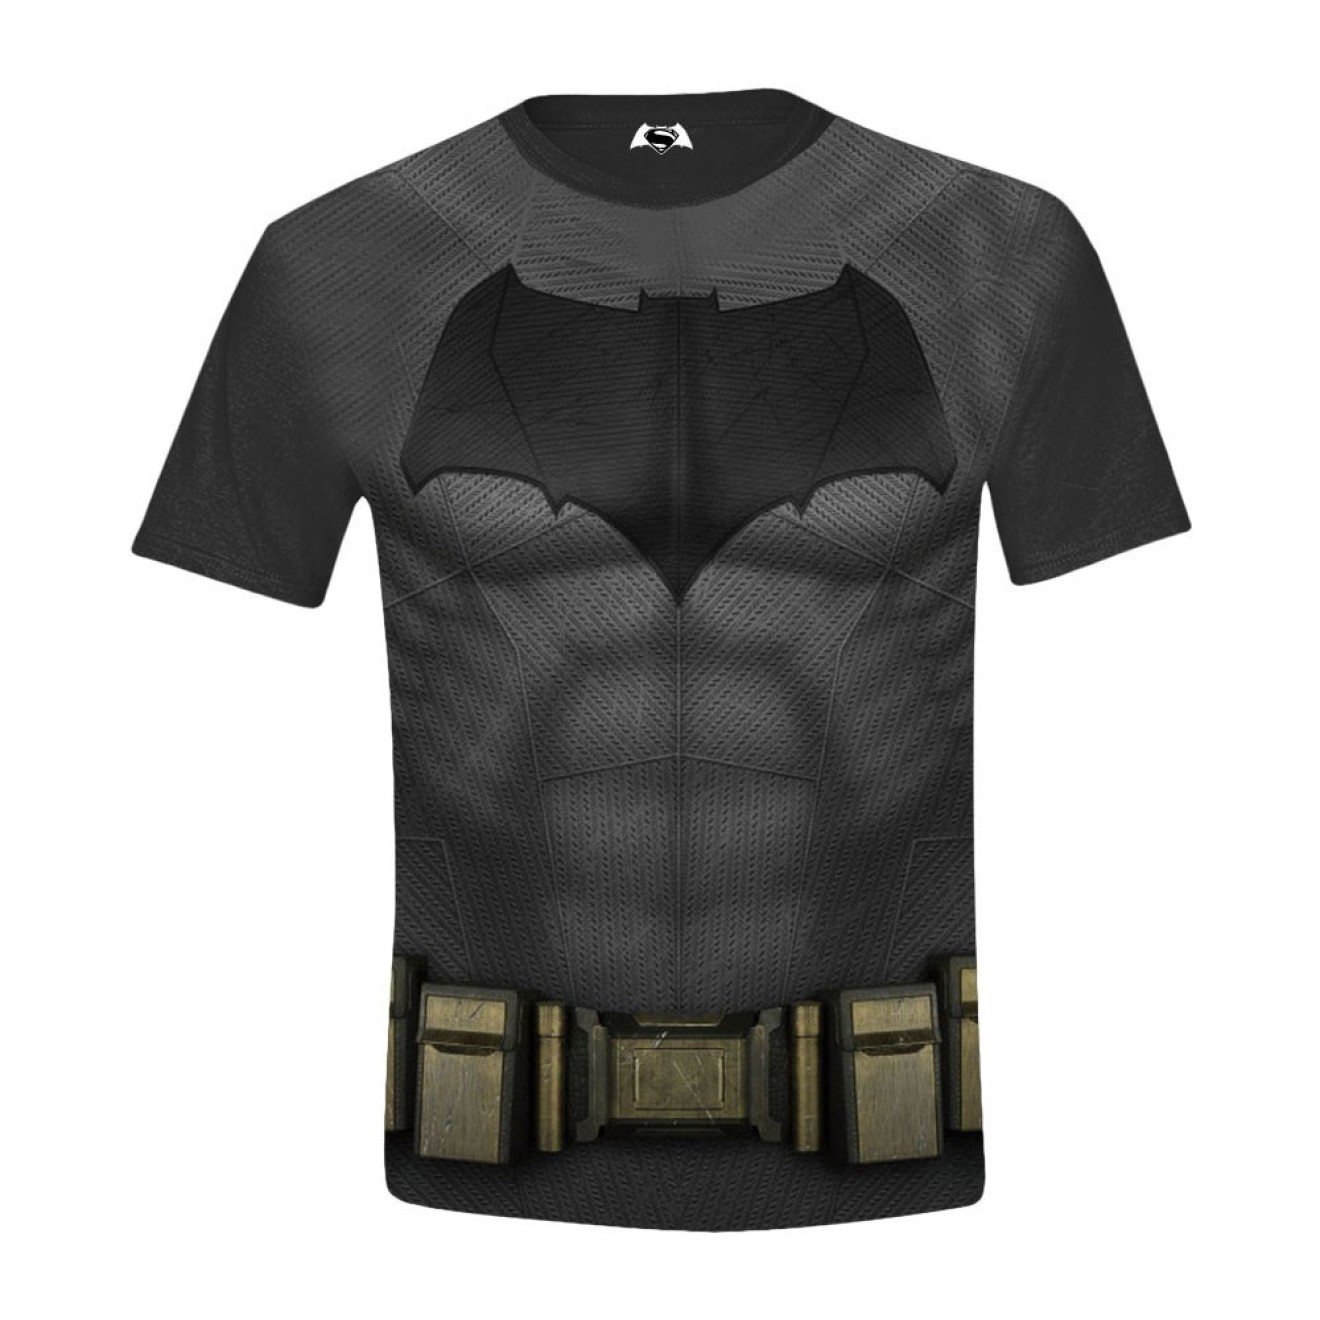 Batman - Fullprint per maglietta per bambini